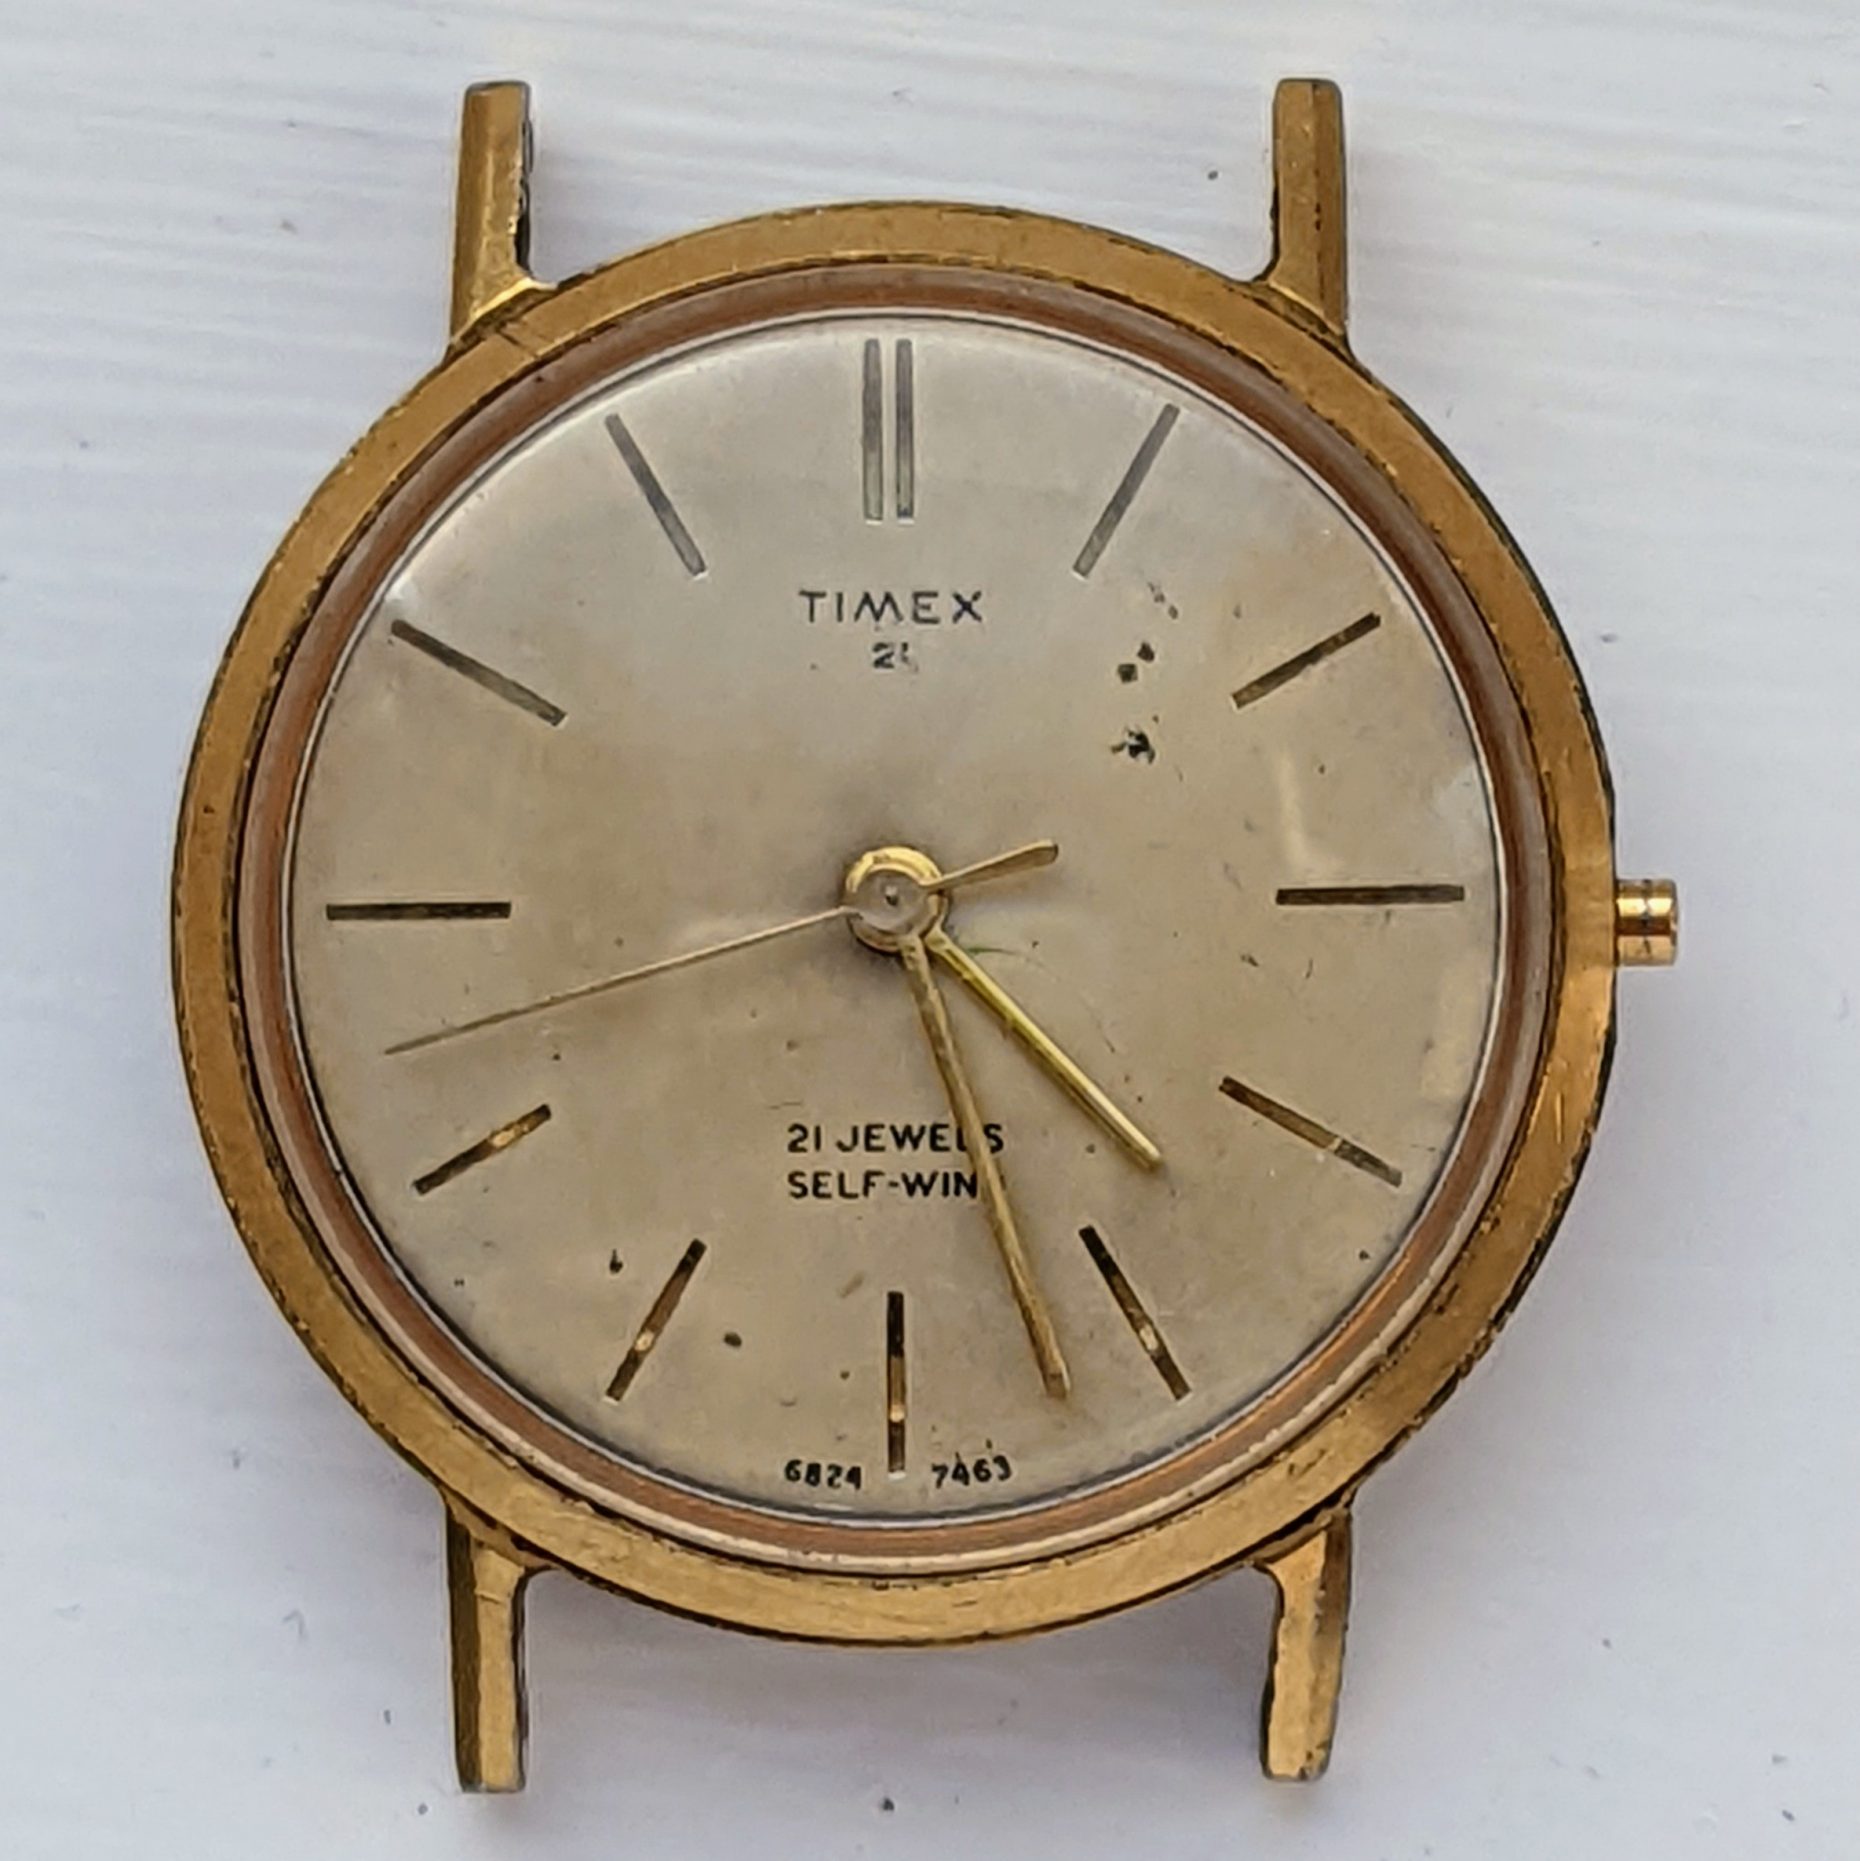 Timex 21 Jewel 6824 7463 [1963] Self Wind